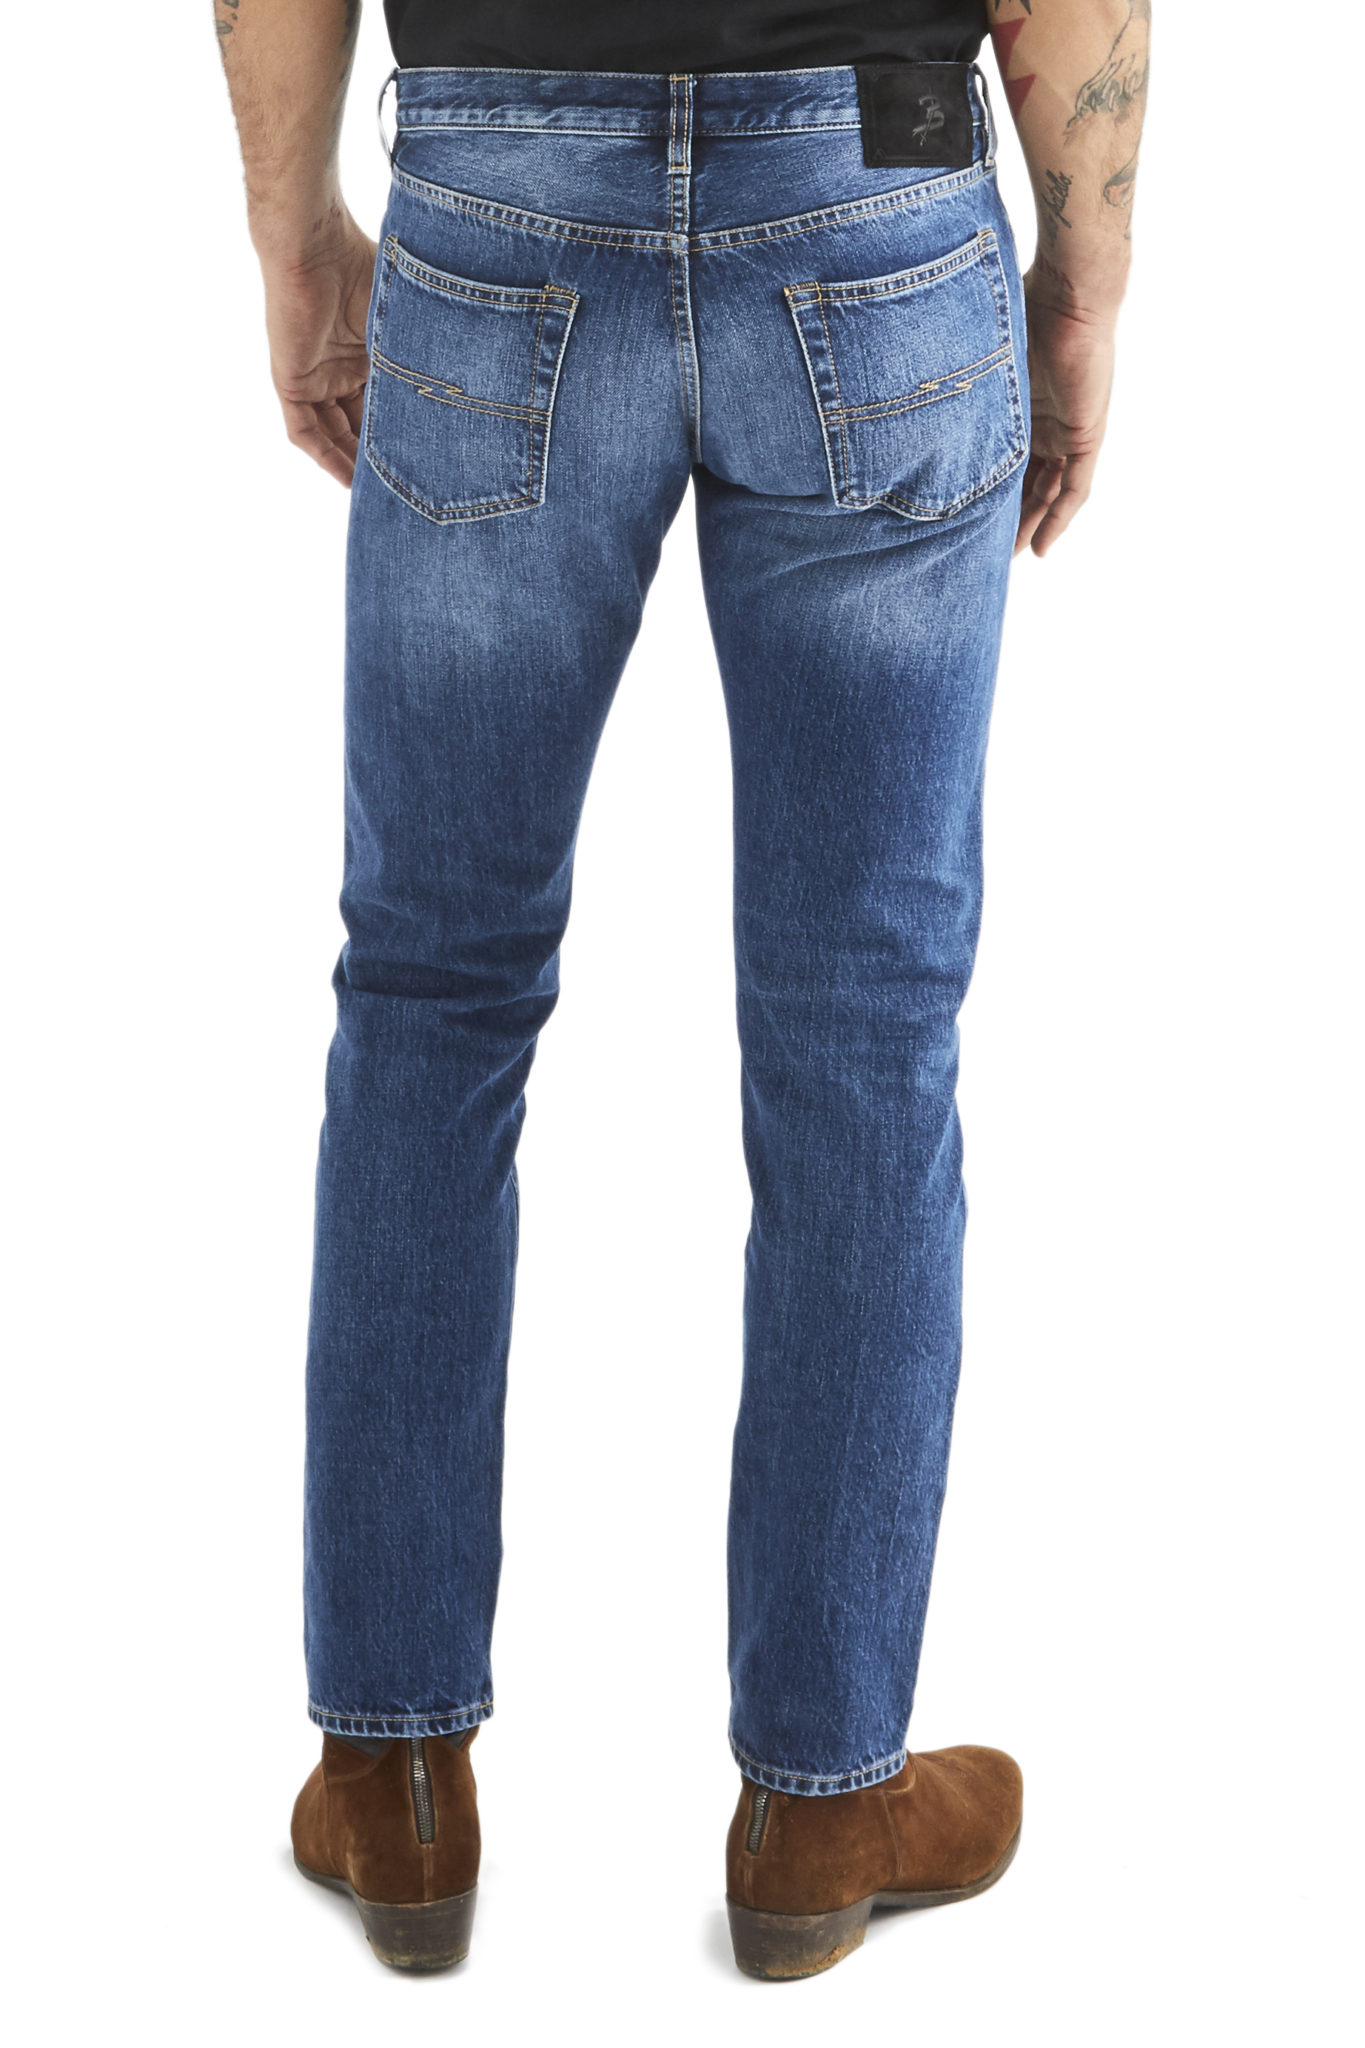 Bandito Blue Light Wash Slim Fit Selvedge Jeans - Barbanera